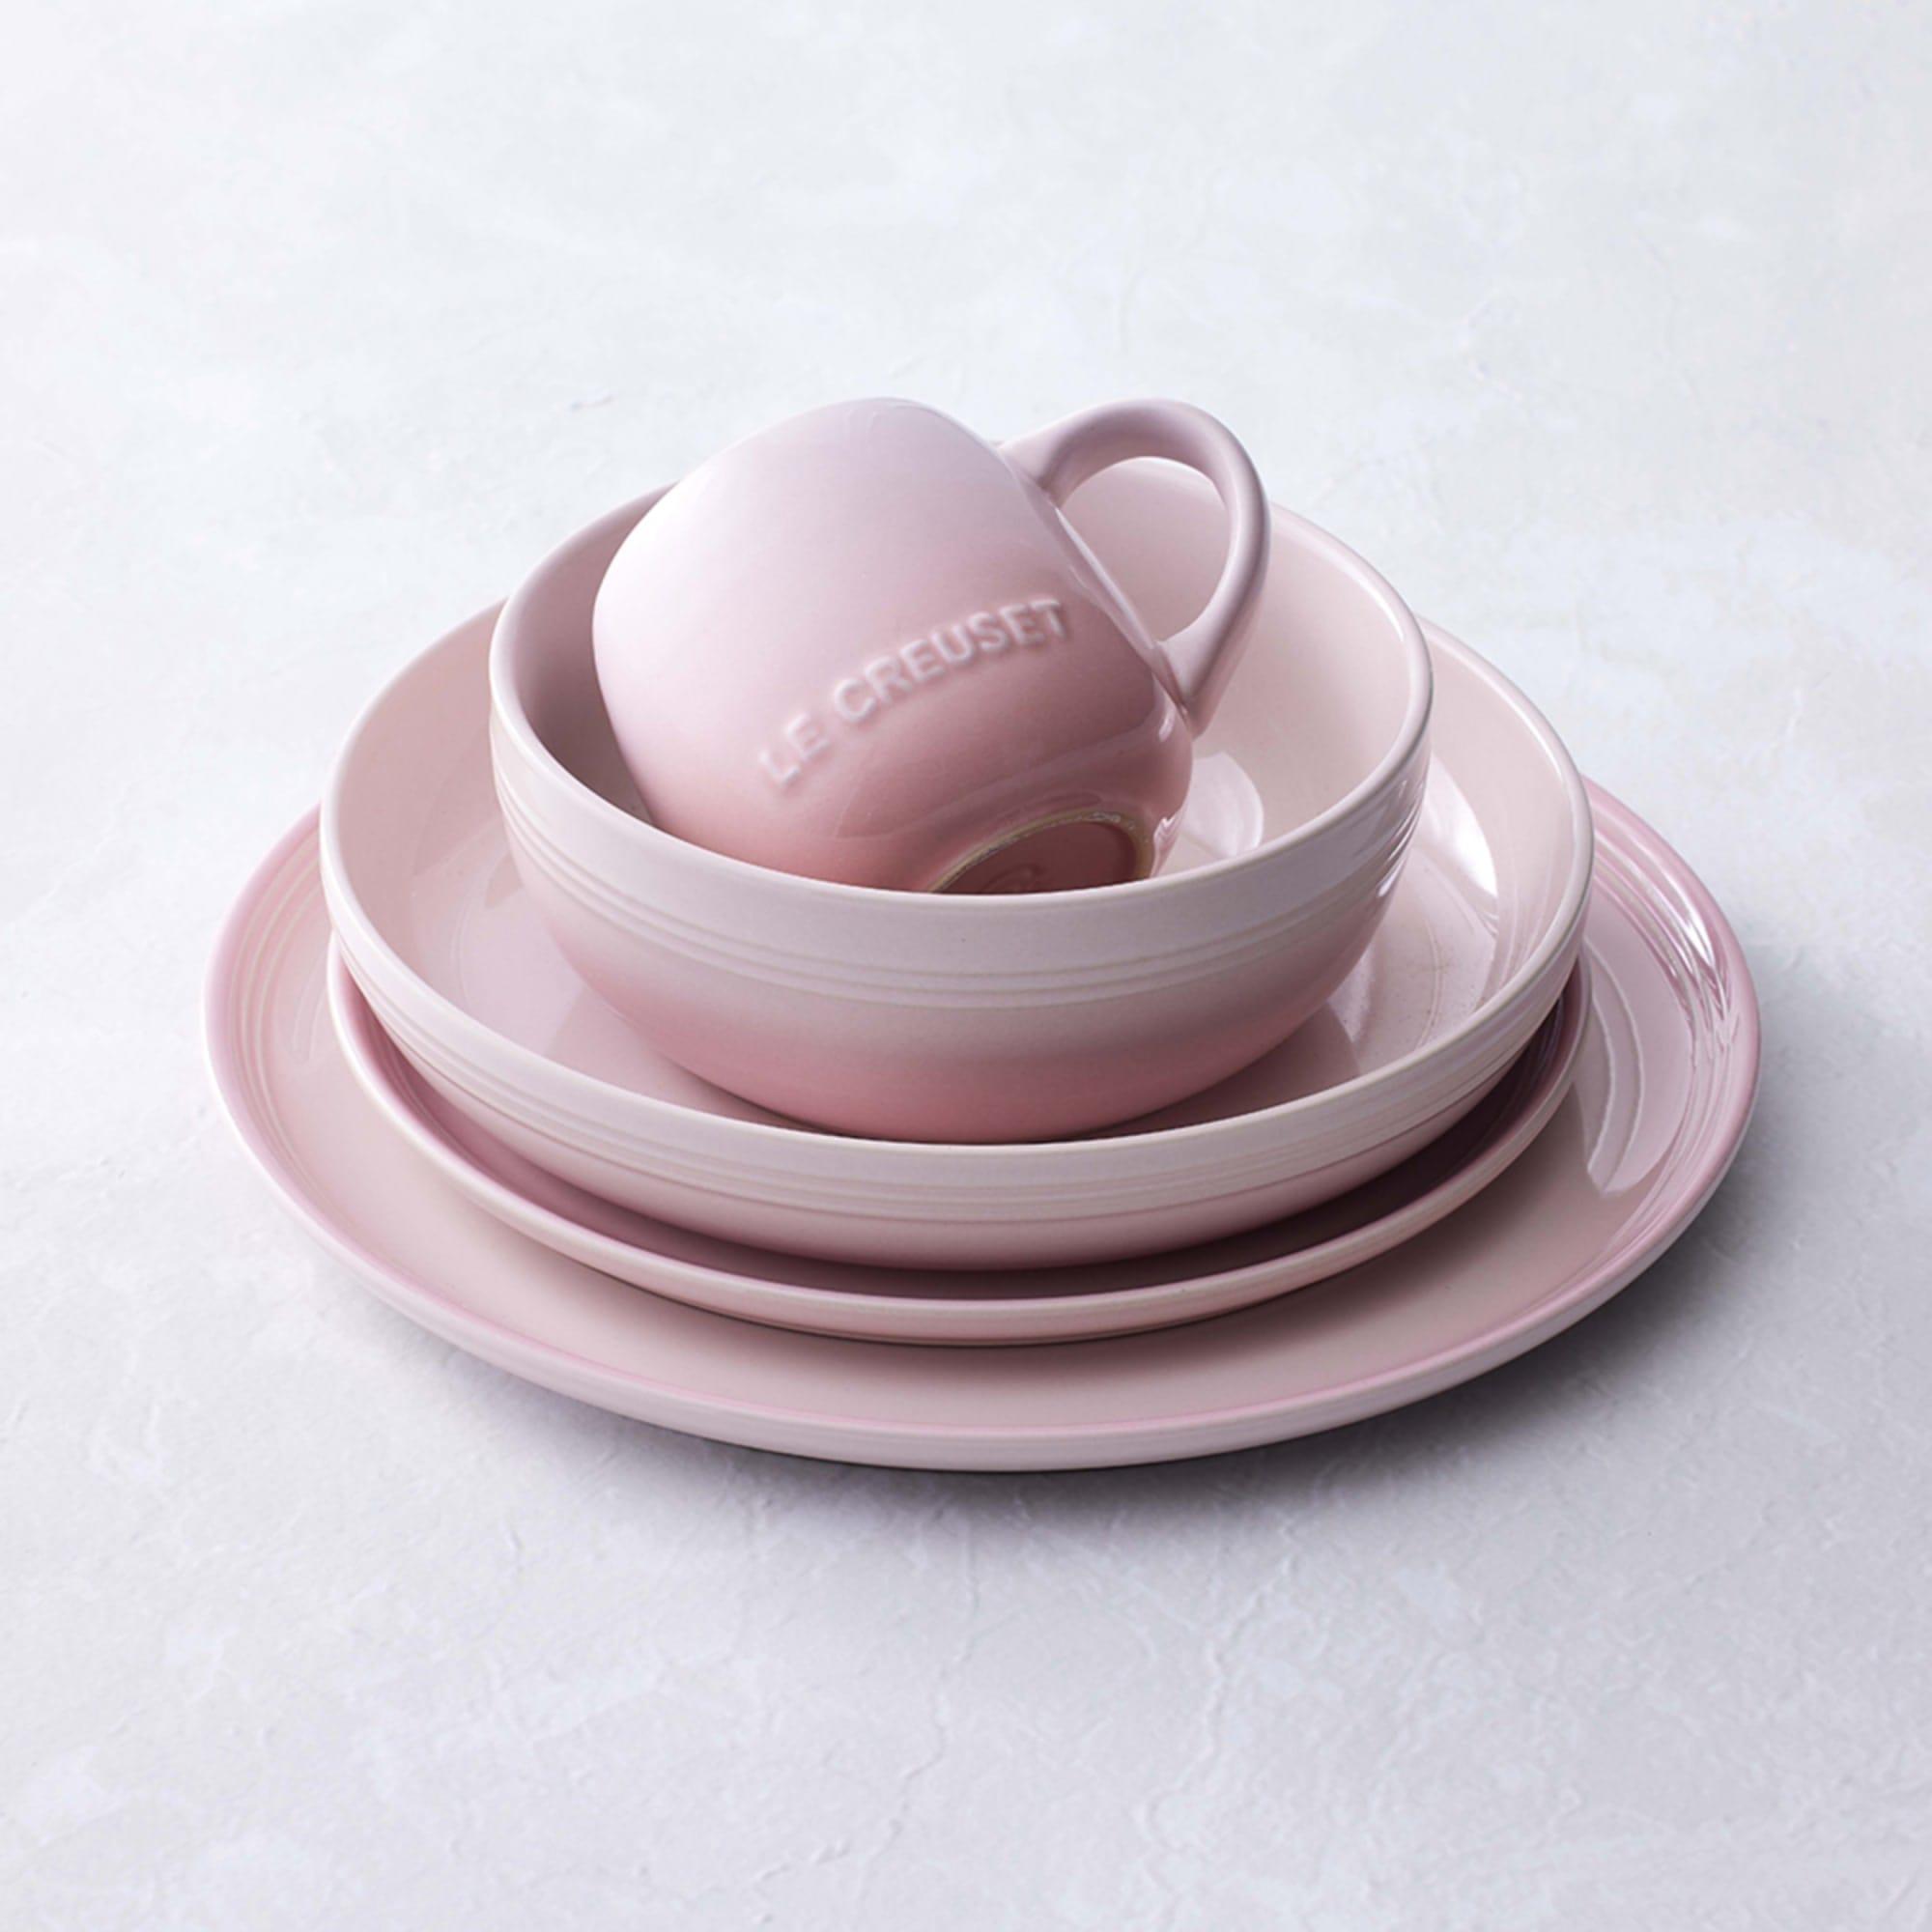 Le Creuset Stoneware Coupe Mug 320ml Shell Pink Image 3